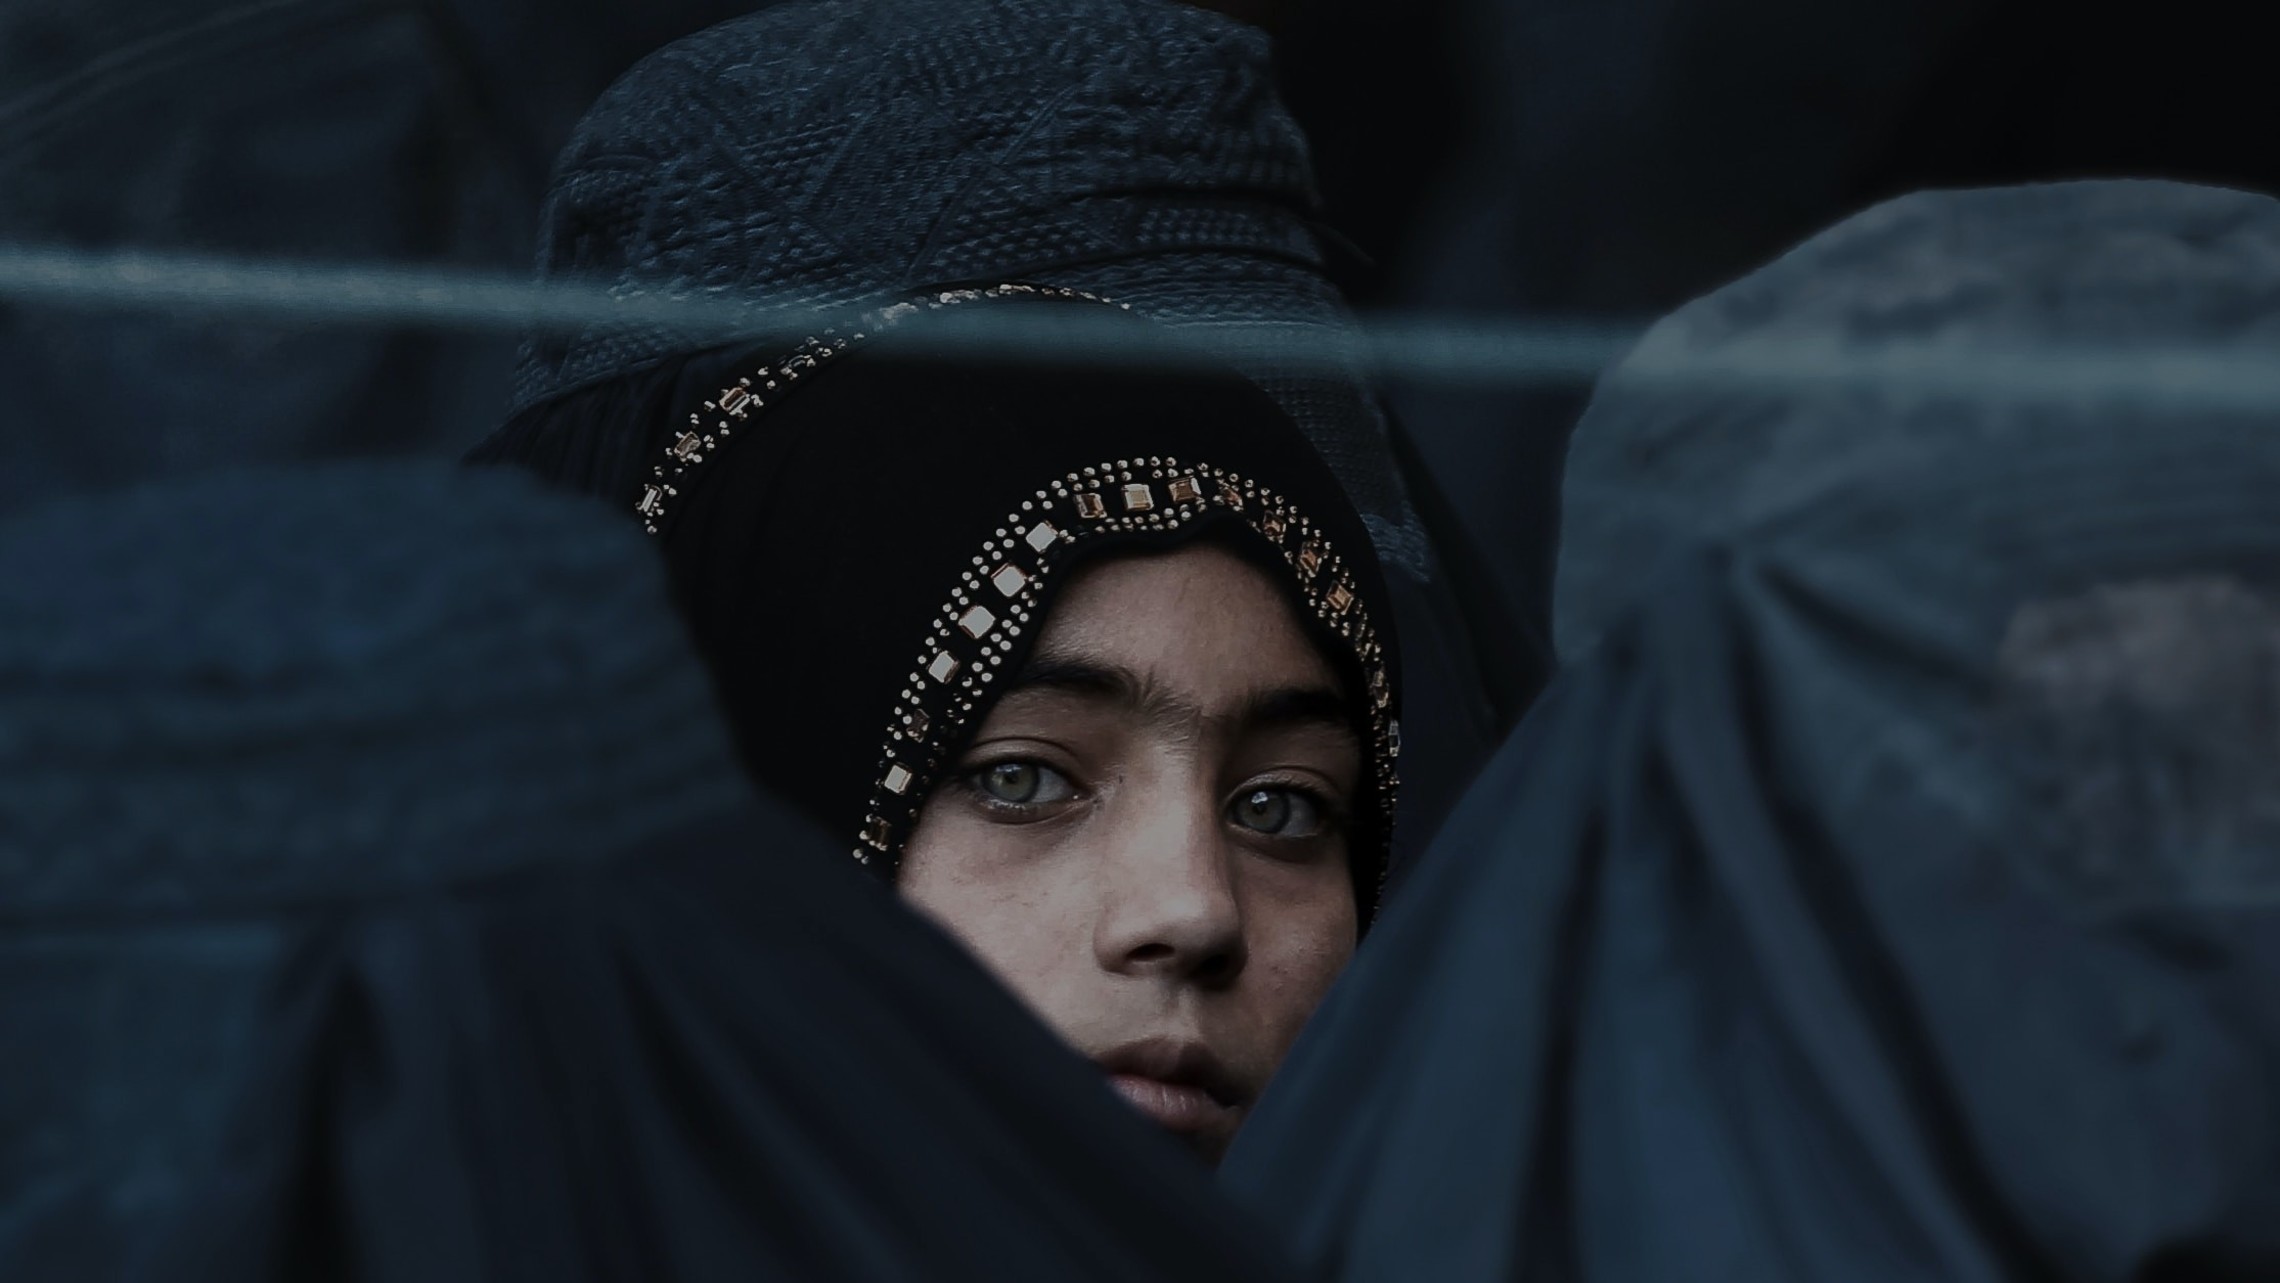 Afghan girl looks at camera